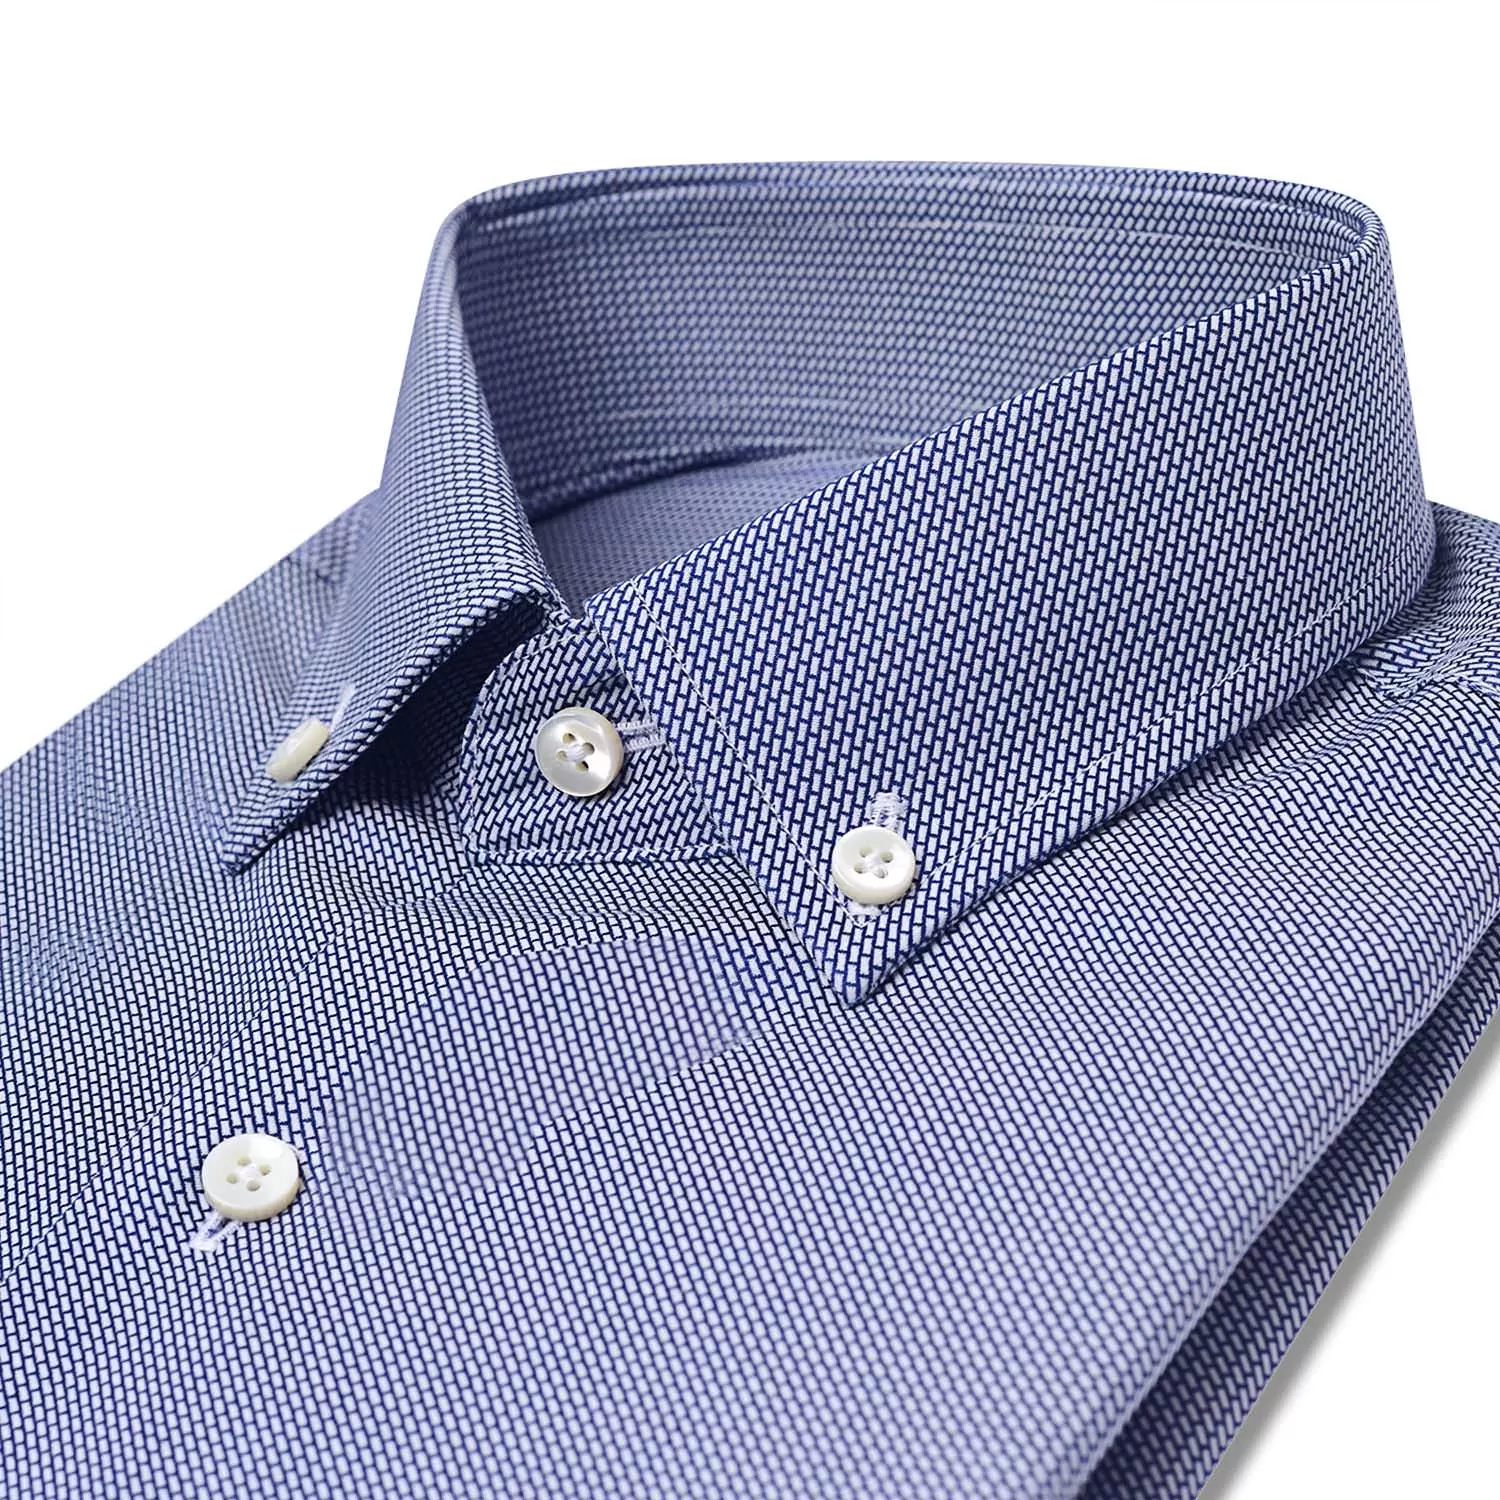 Wholesale Bespoke Men's Dark Blue Button Down Textured Casual Dress Shirt Bangladesh Manufacturer